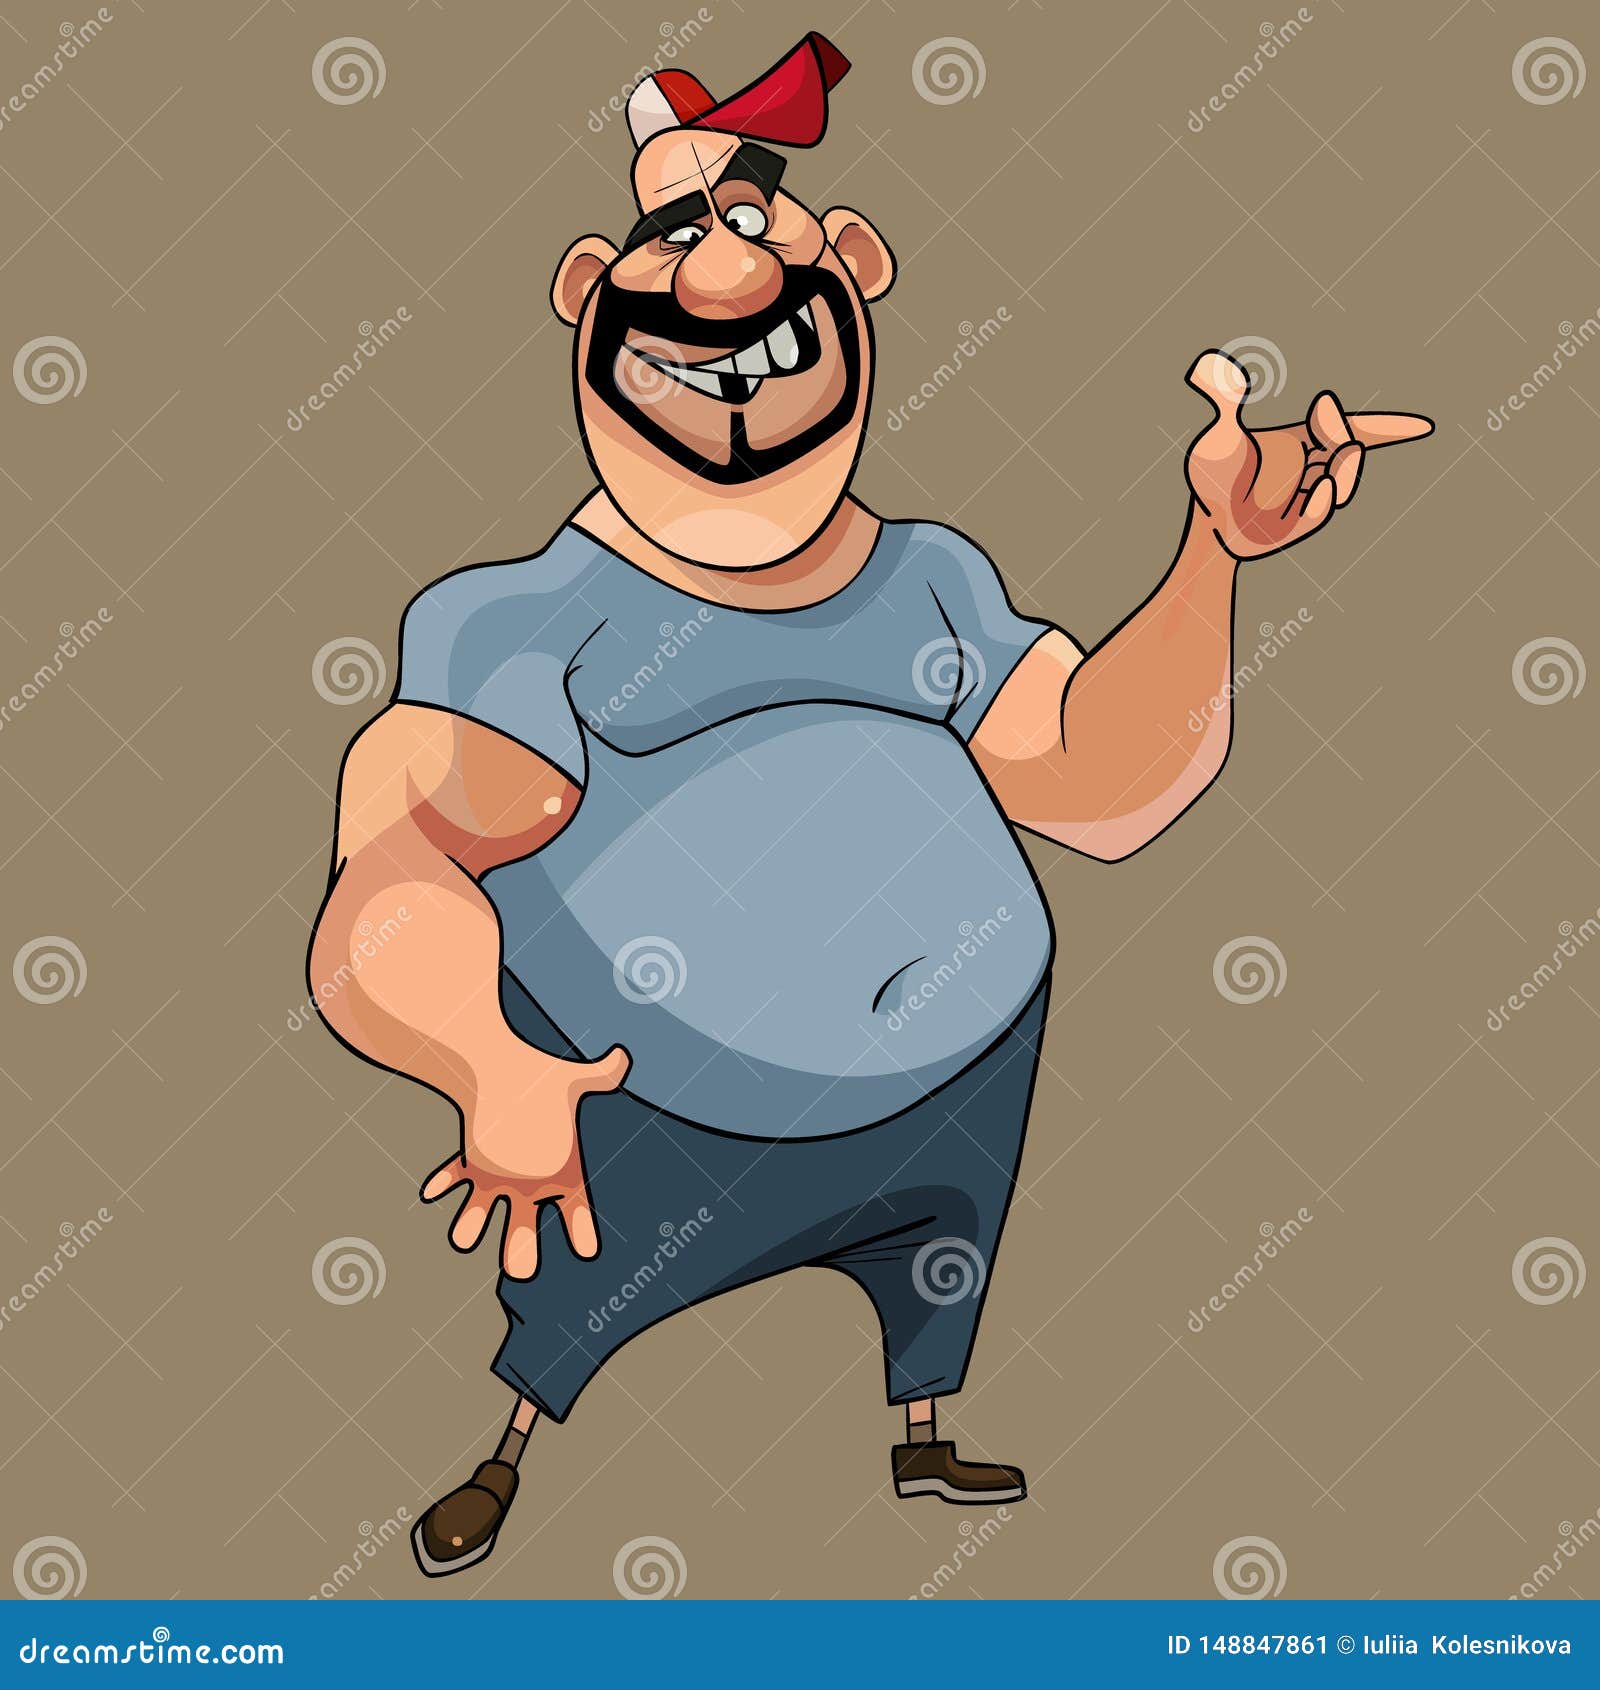 cartoon smiling muscular man in a cap says gesticulating